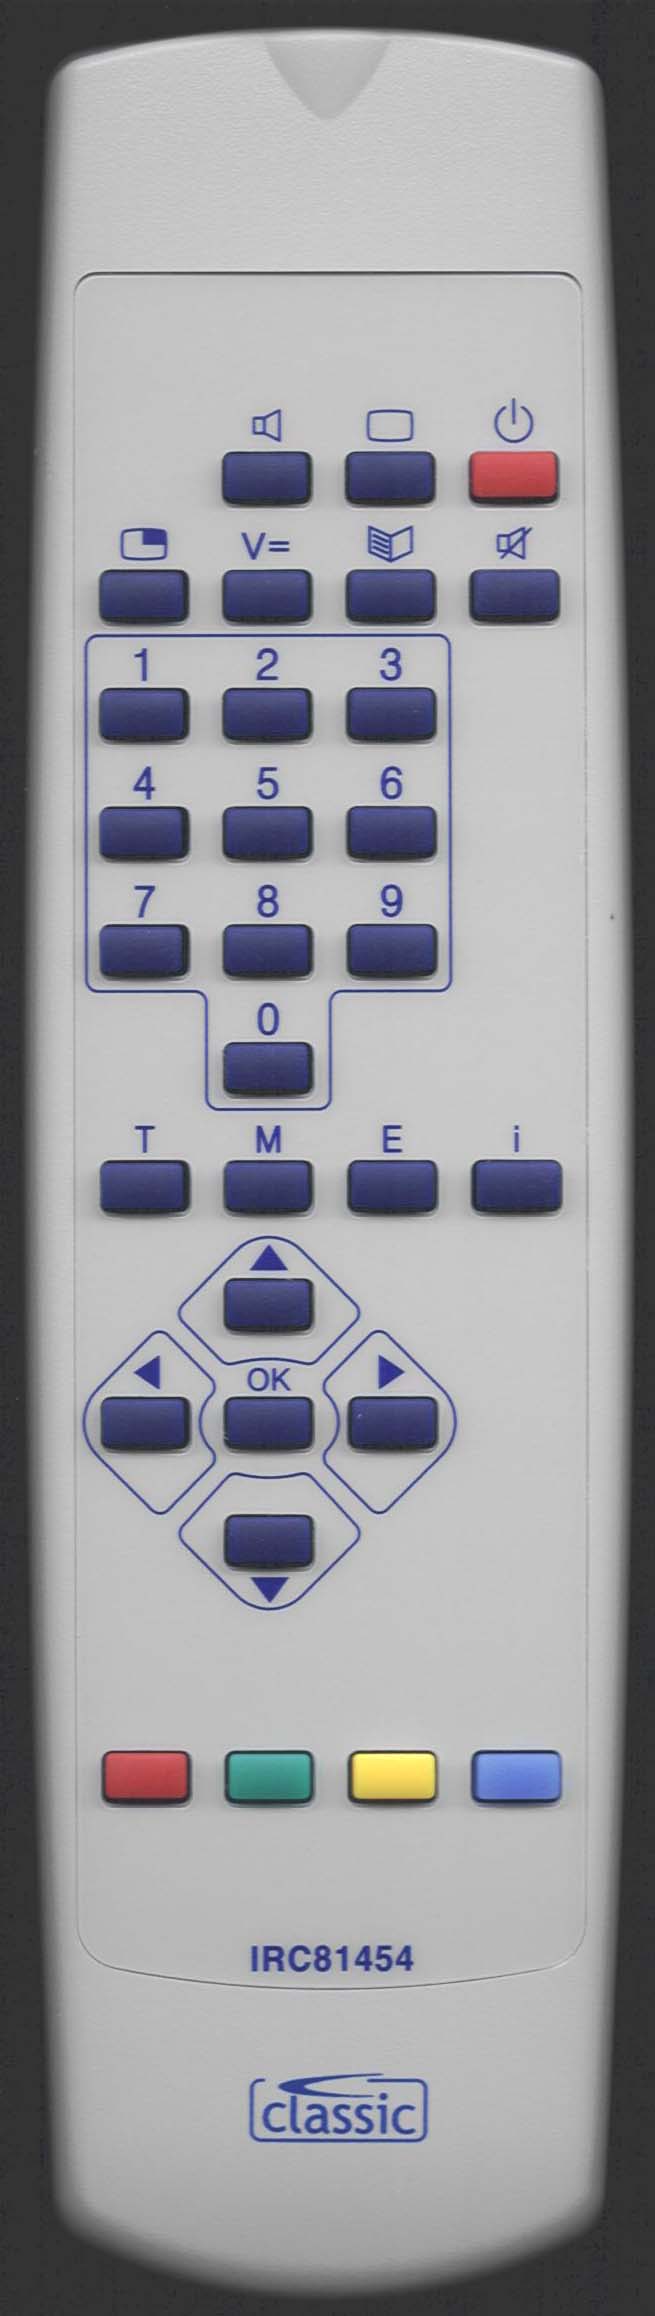 Loewe ACONDA 9381 Remote Control